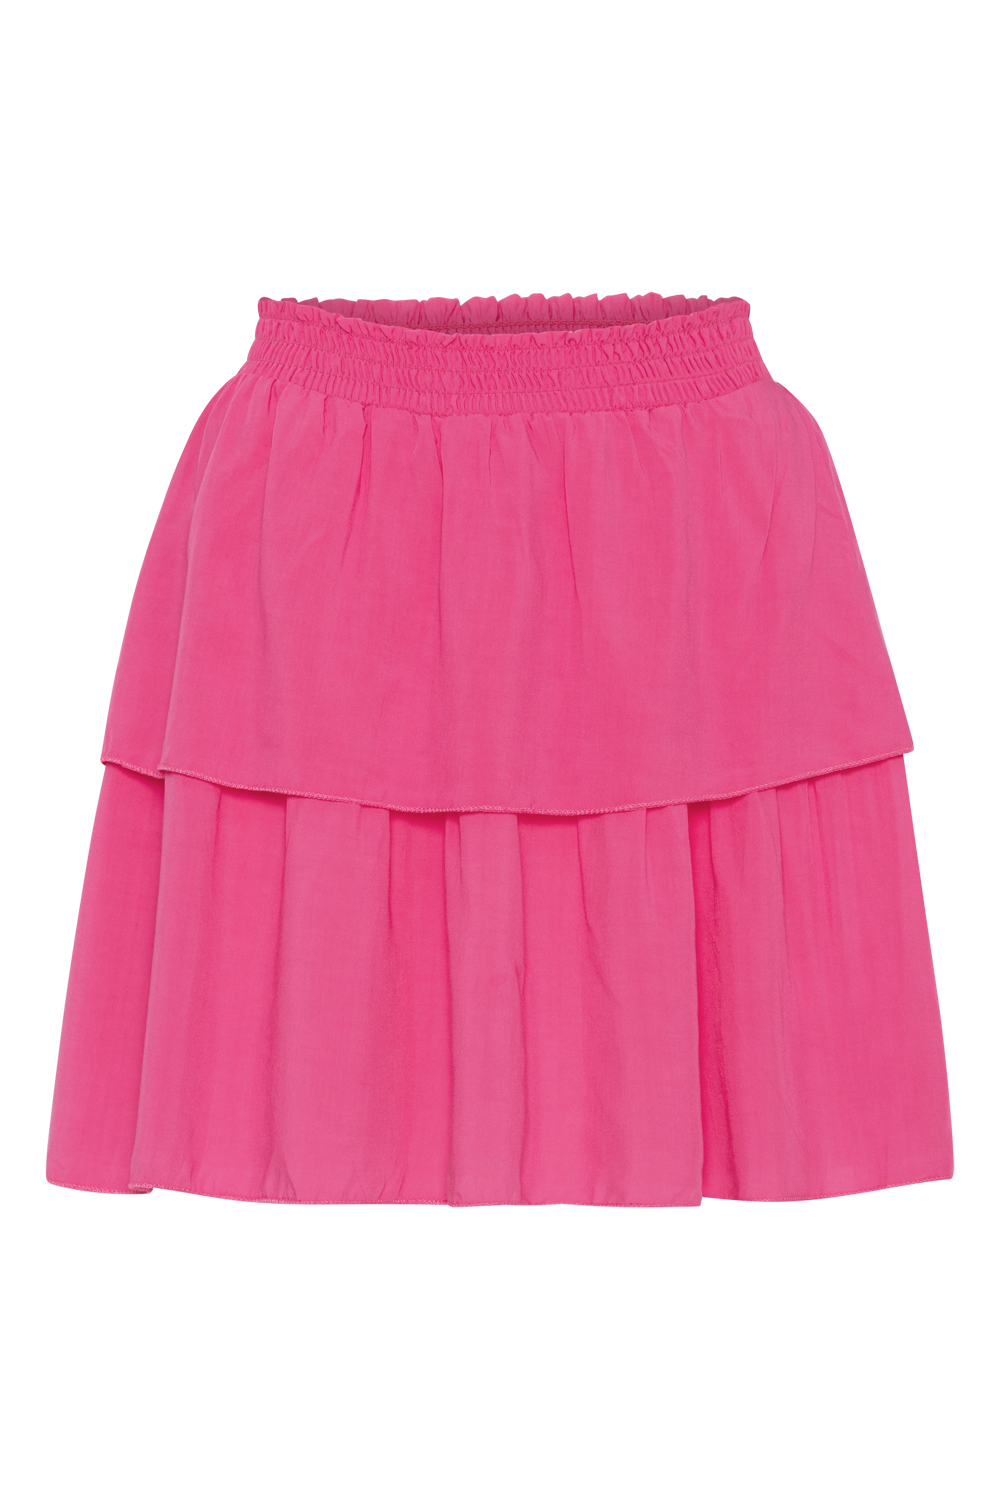 Sally Short Skirt Solid Pink